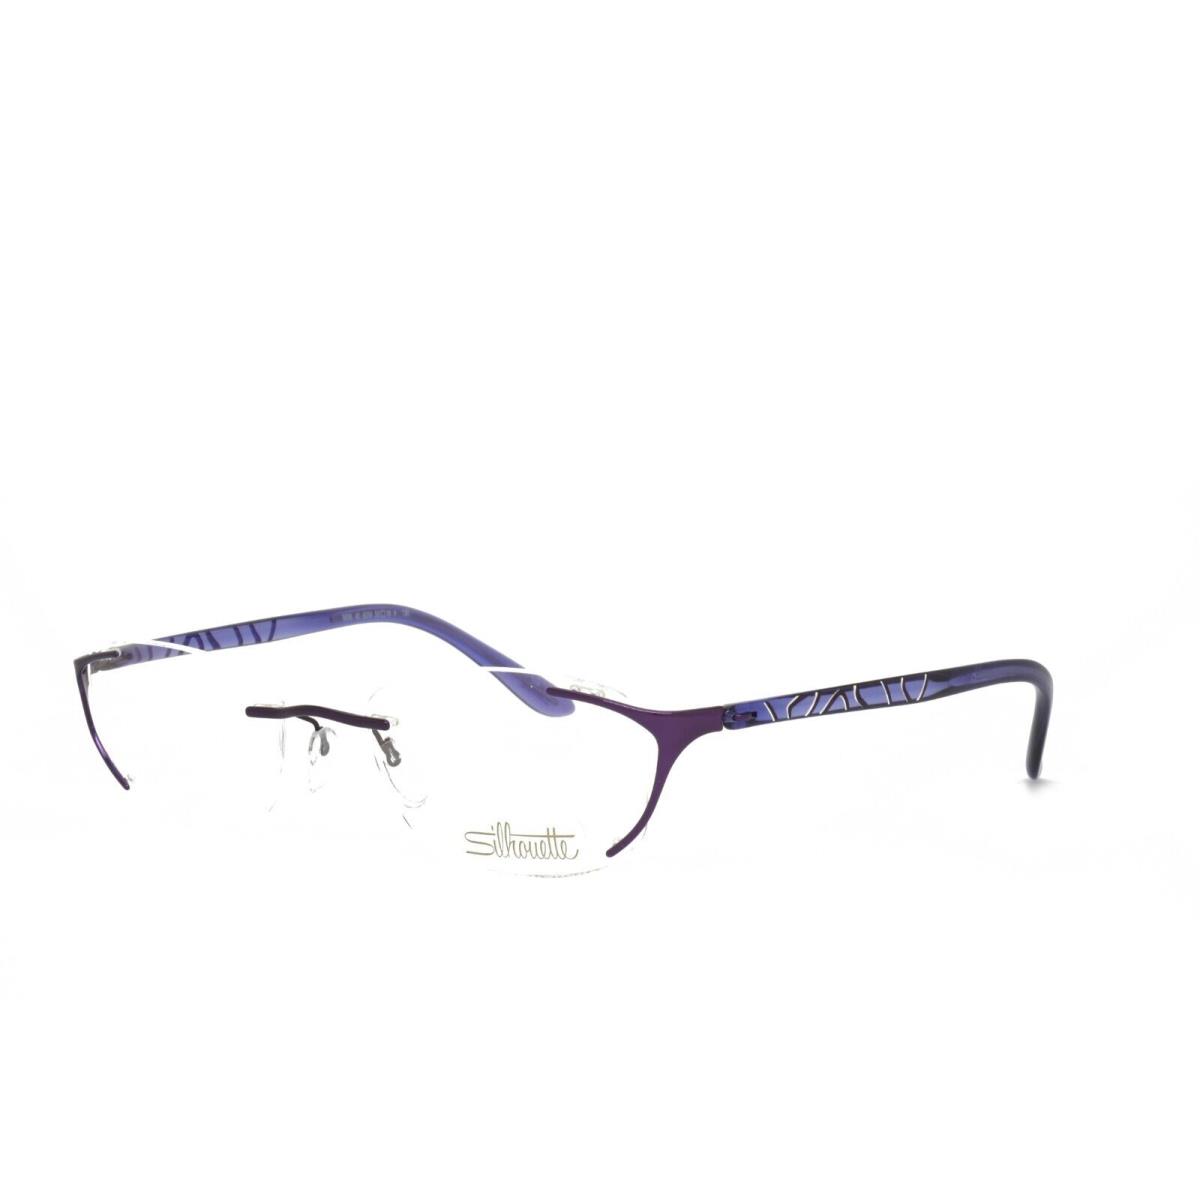 Silhouette 6658 40 6054 50-18-130 Purple Eyeglasses